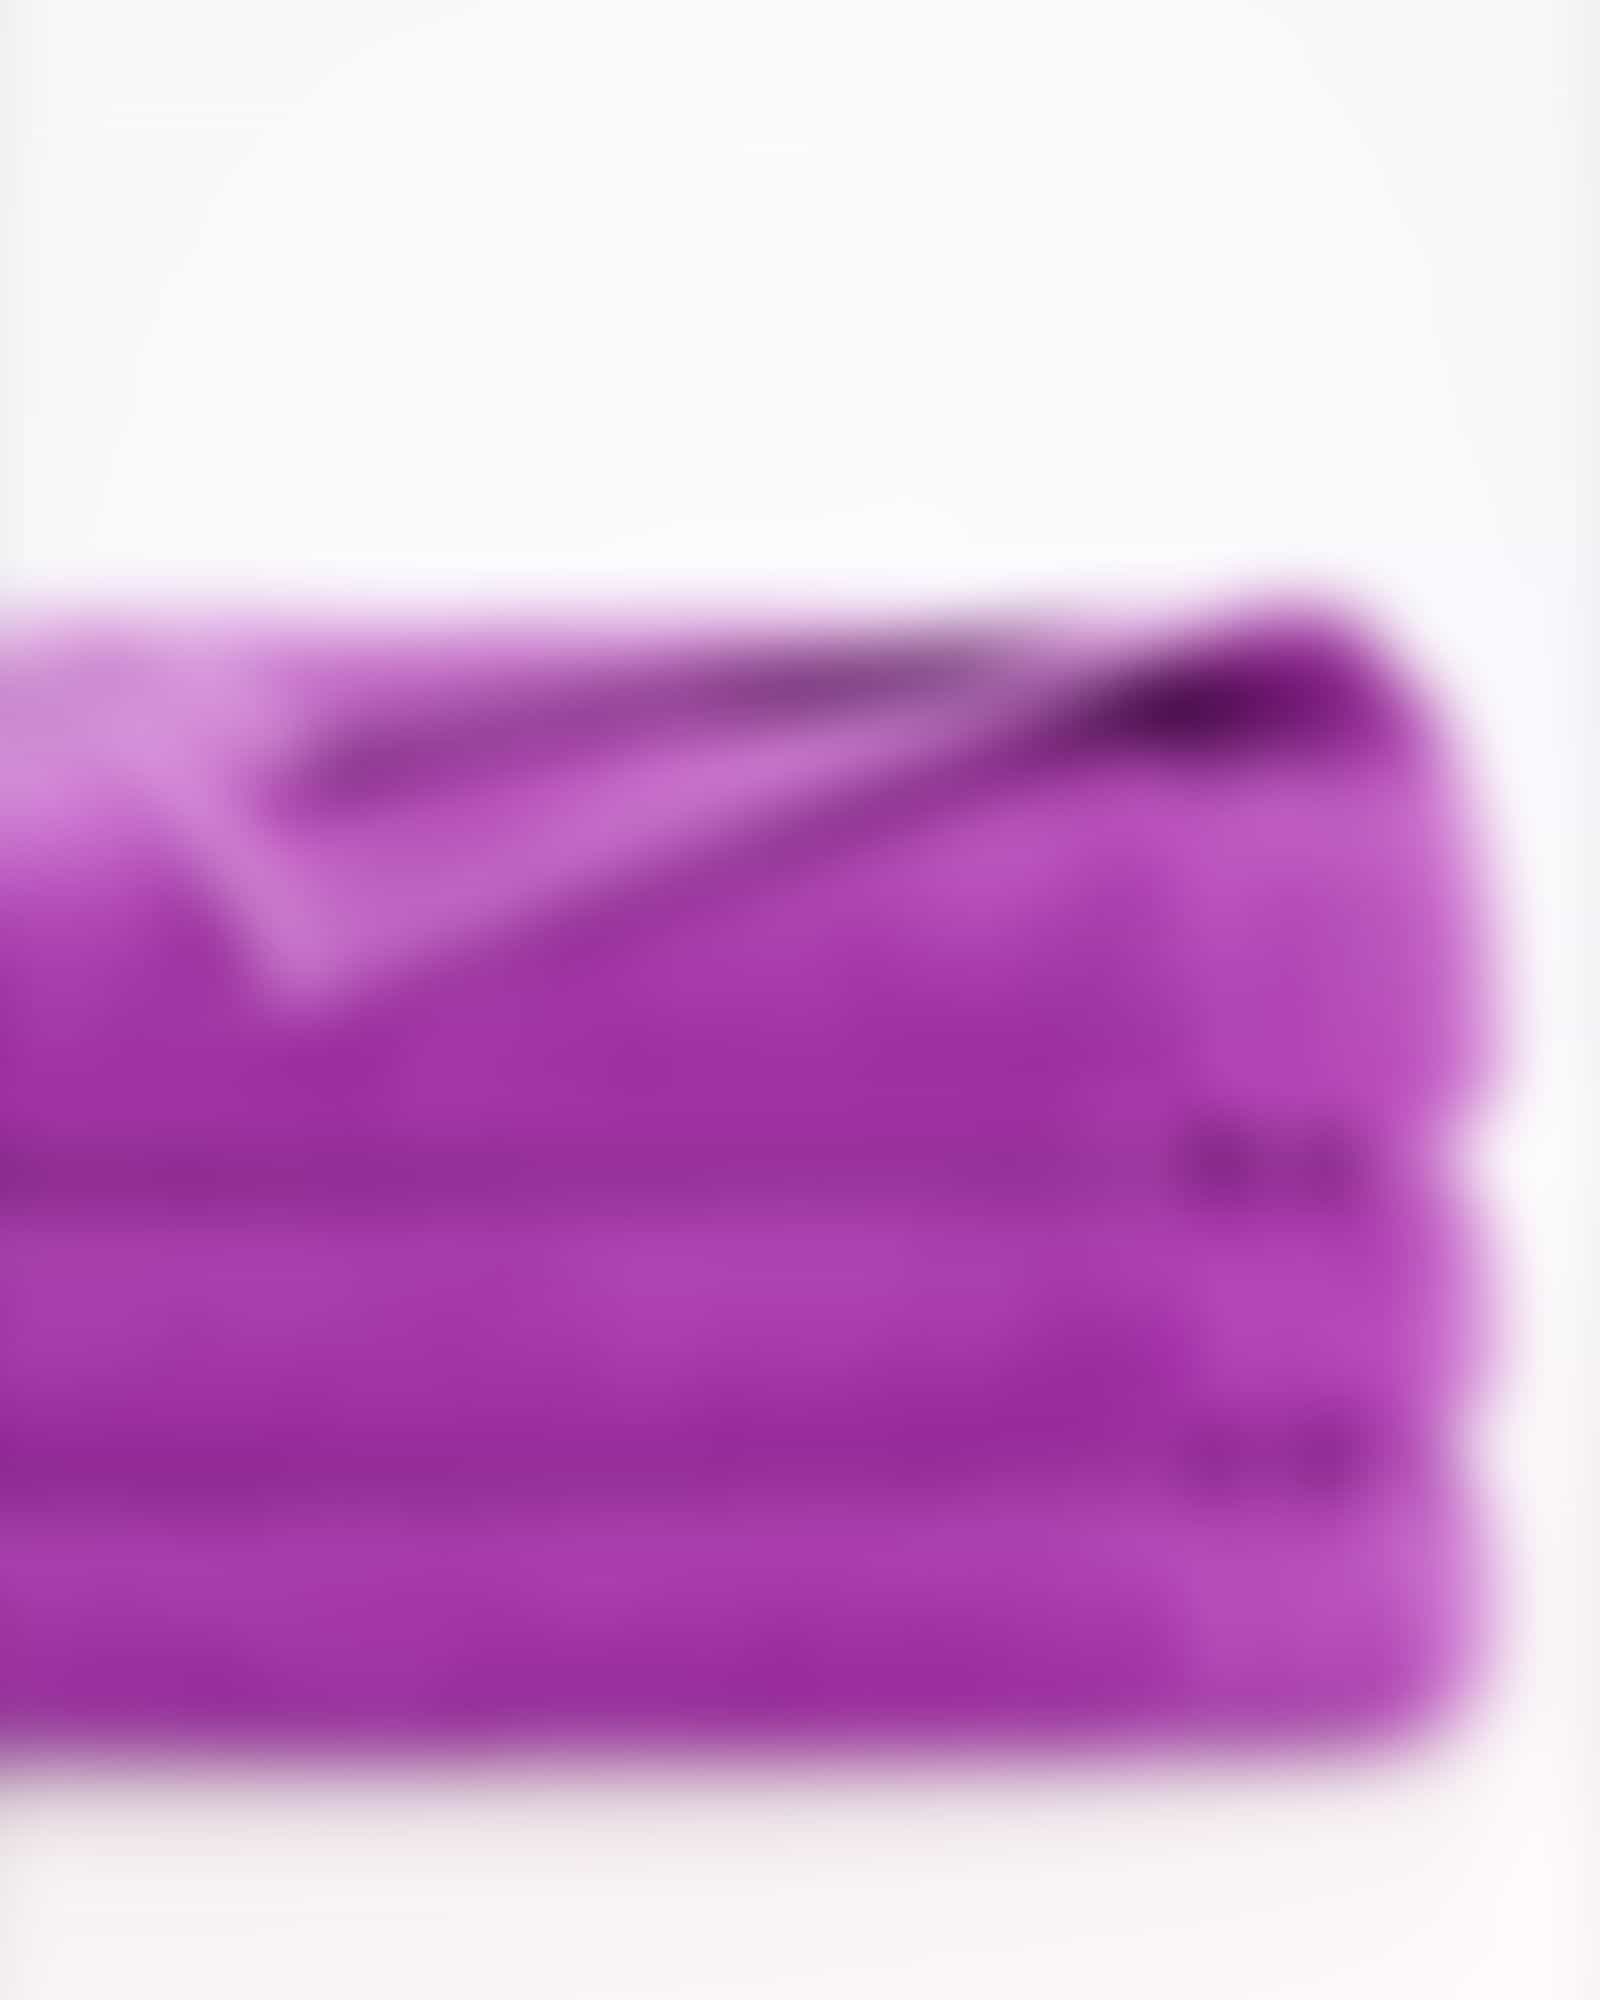 Vossen Handtücher Calypso Feeling - Farbe: lollipop - 8460 - Handtuch 50x100 cm Detailbild 2